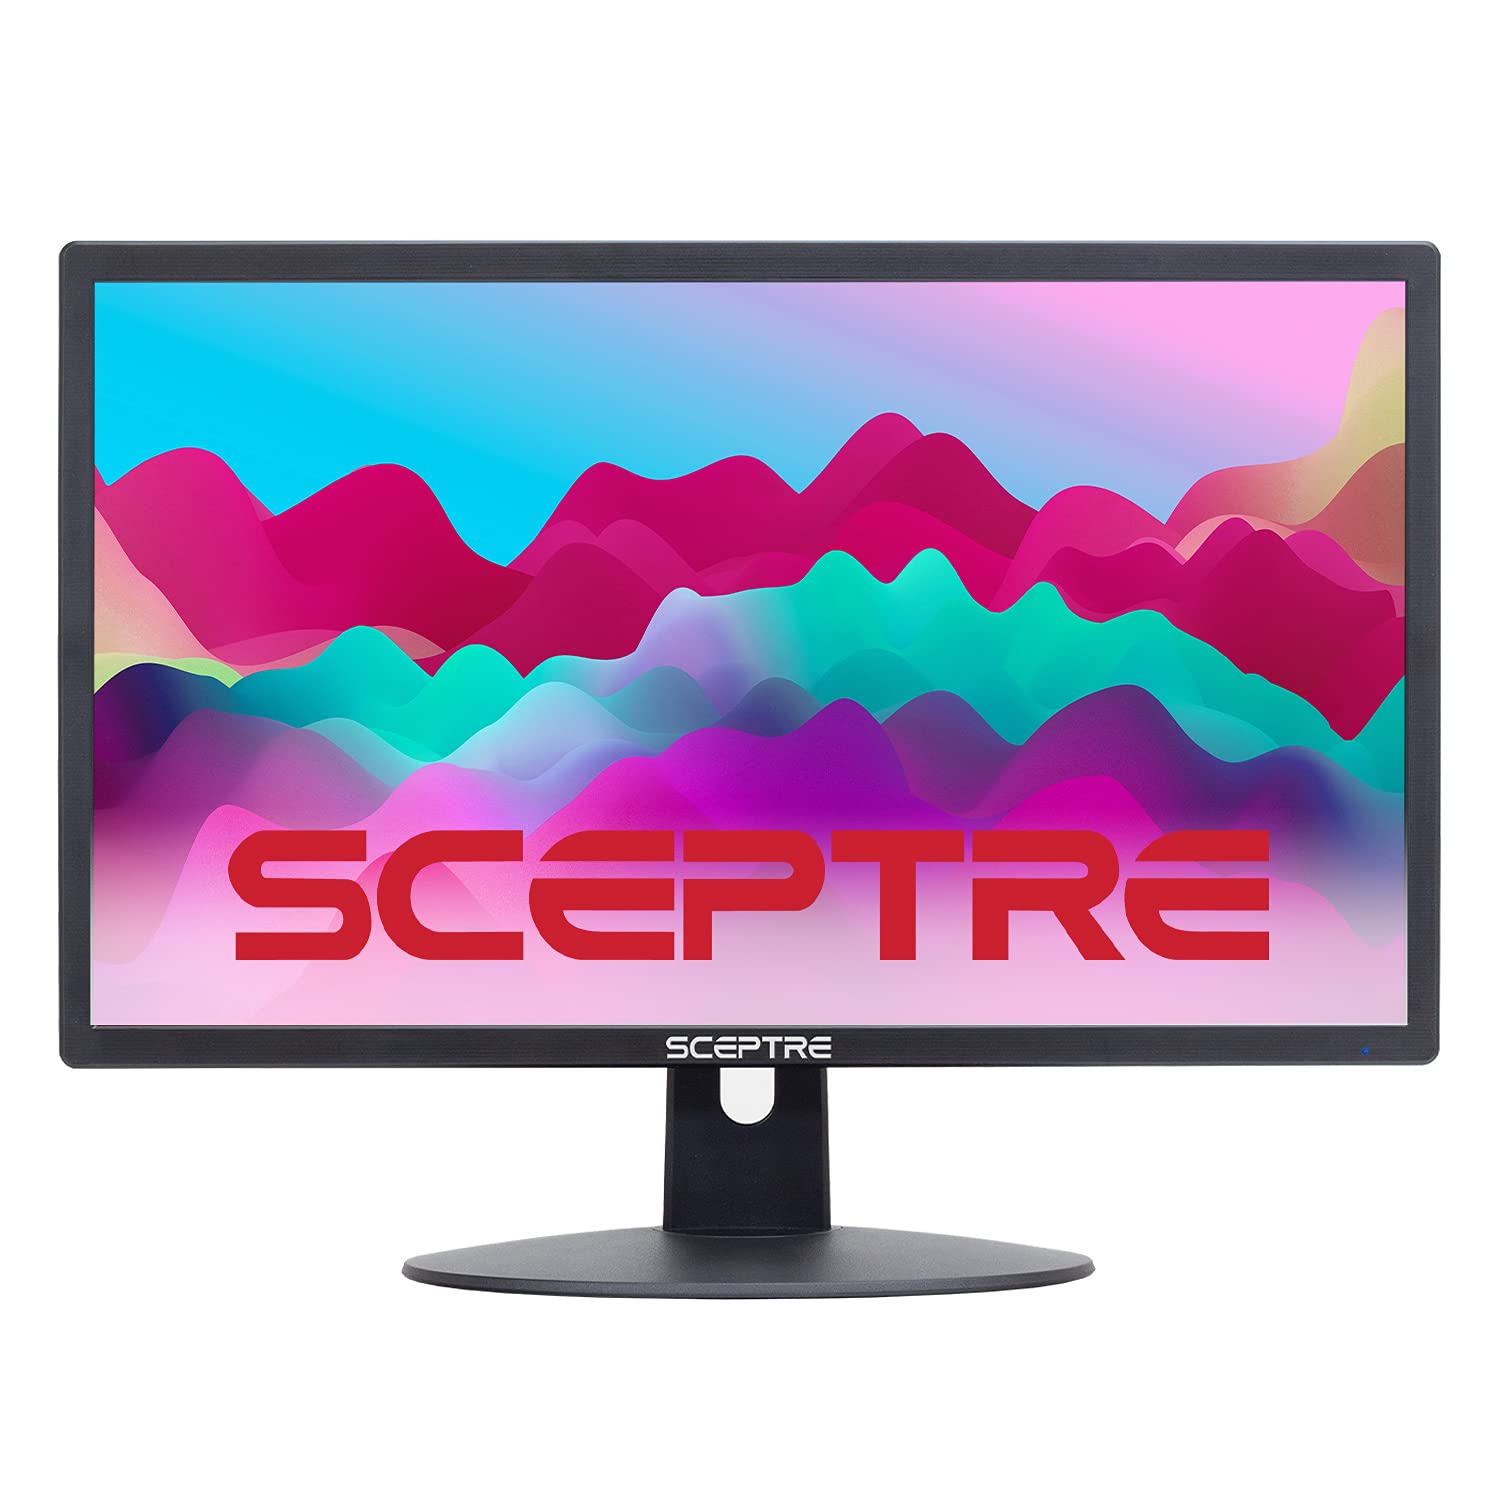 22" Sceptre FHD LED 75Hz Computer Monitor $78.79 shipped w/ Prime